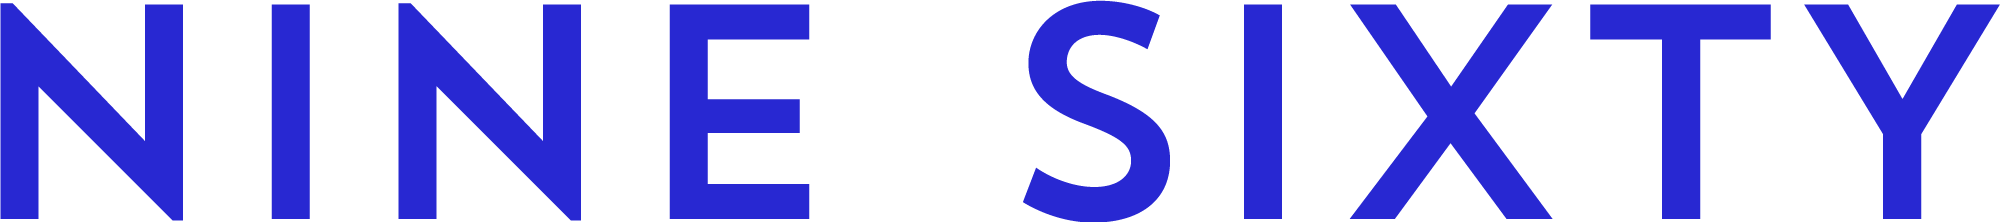 nine-sixty-logo.png